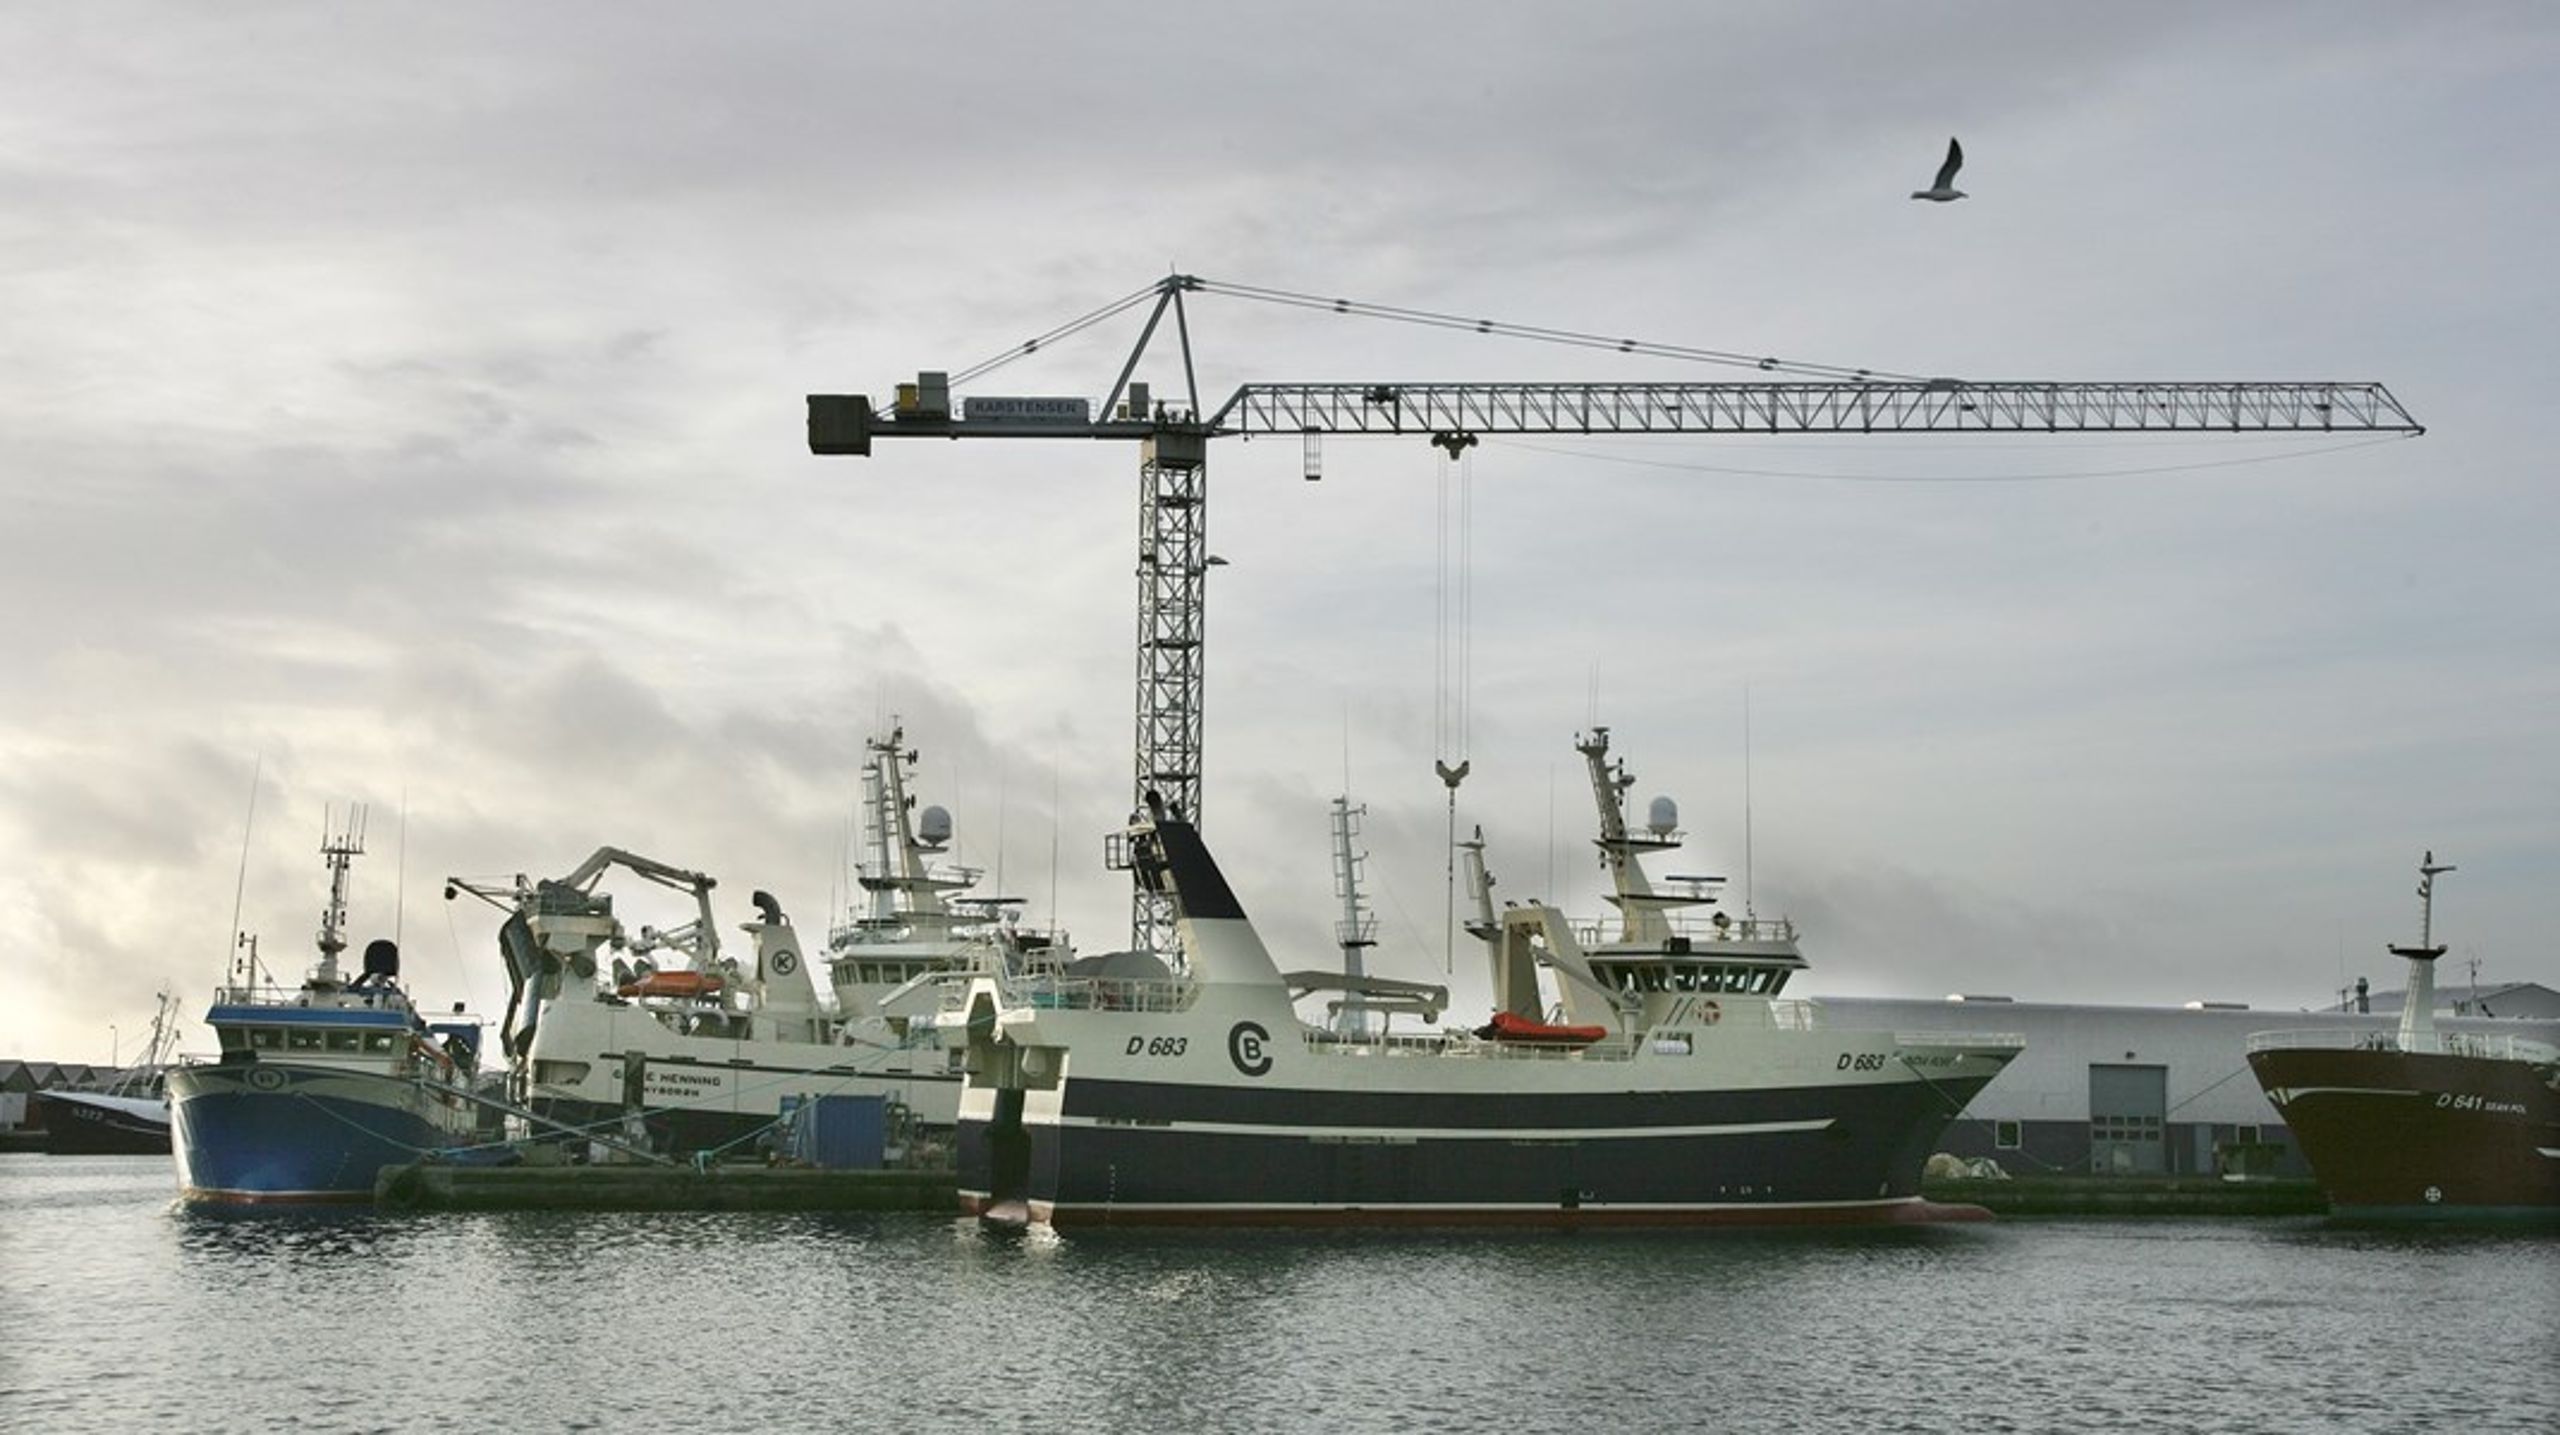 Kan den danske maritime
industri blive teknologisk førende, har vi en historisk chance for at genvinde
en position som førende skibsbyggernation, skriver&nbsp;Johan Moesgaard Andersen og&nbsp;Emil Drevsfeldt Nielsen.